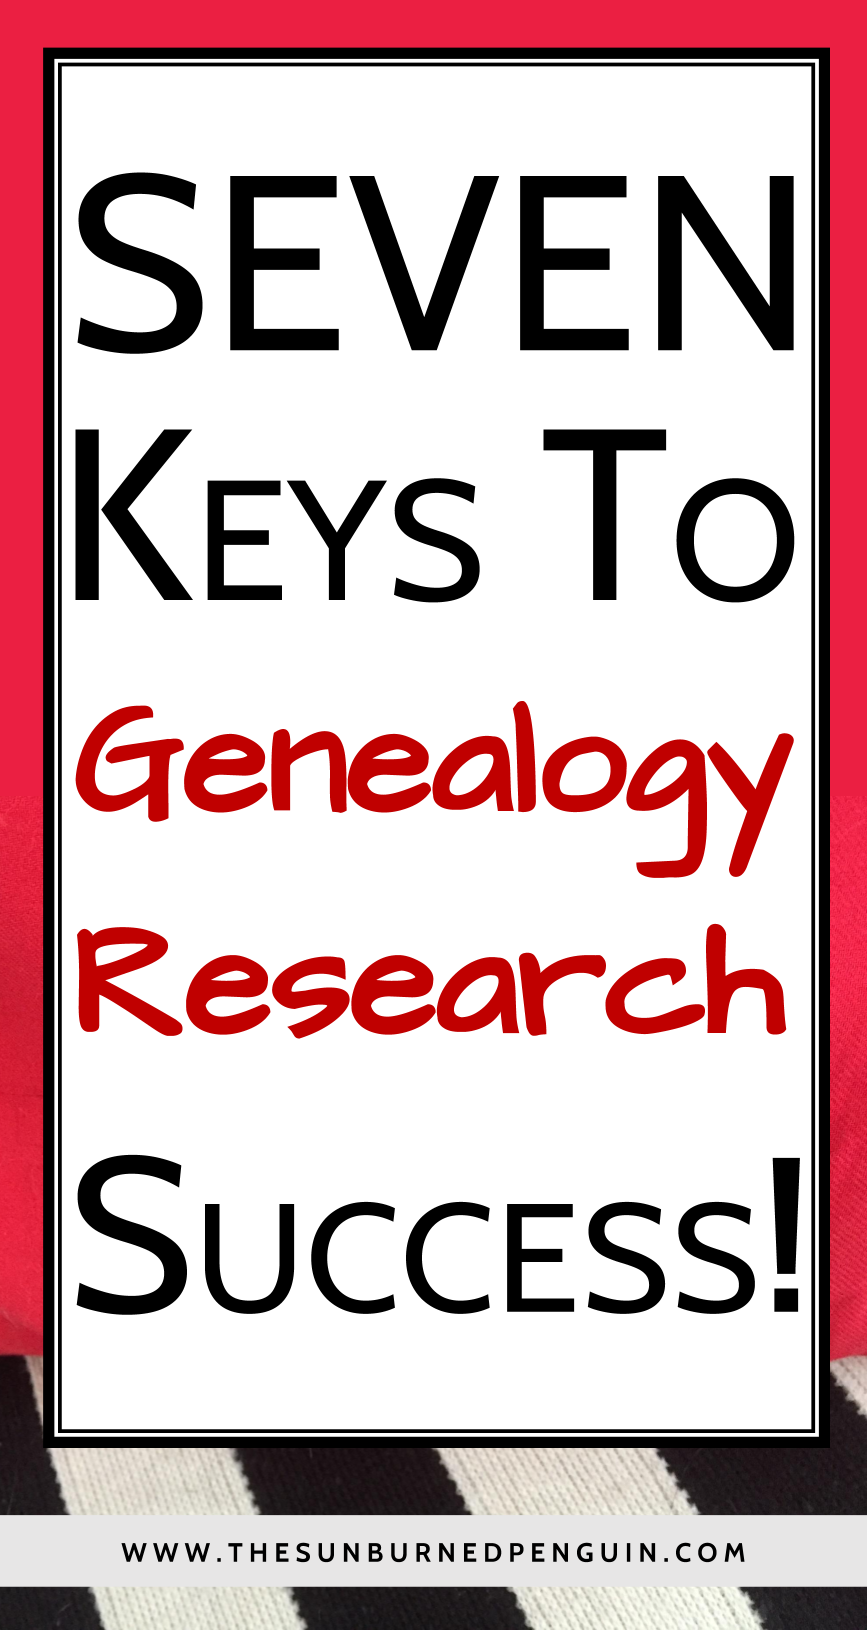 7 Keys to Genealogy Research